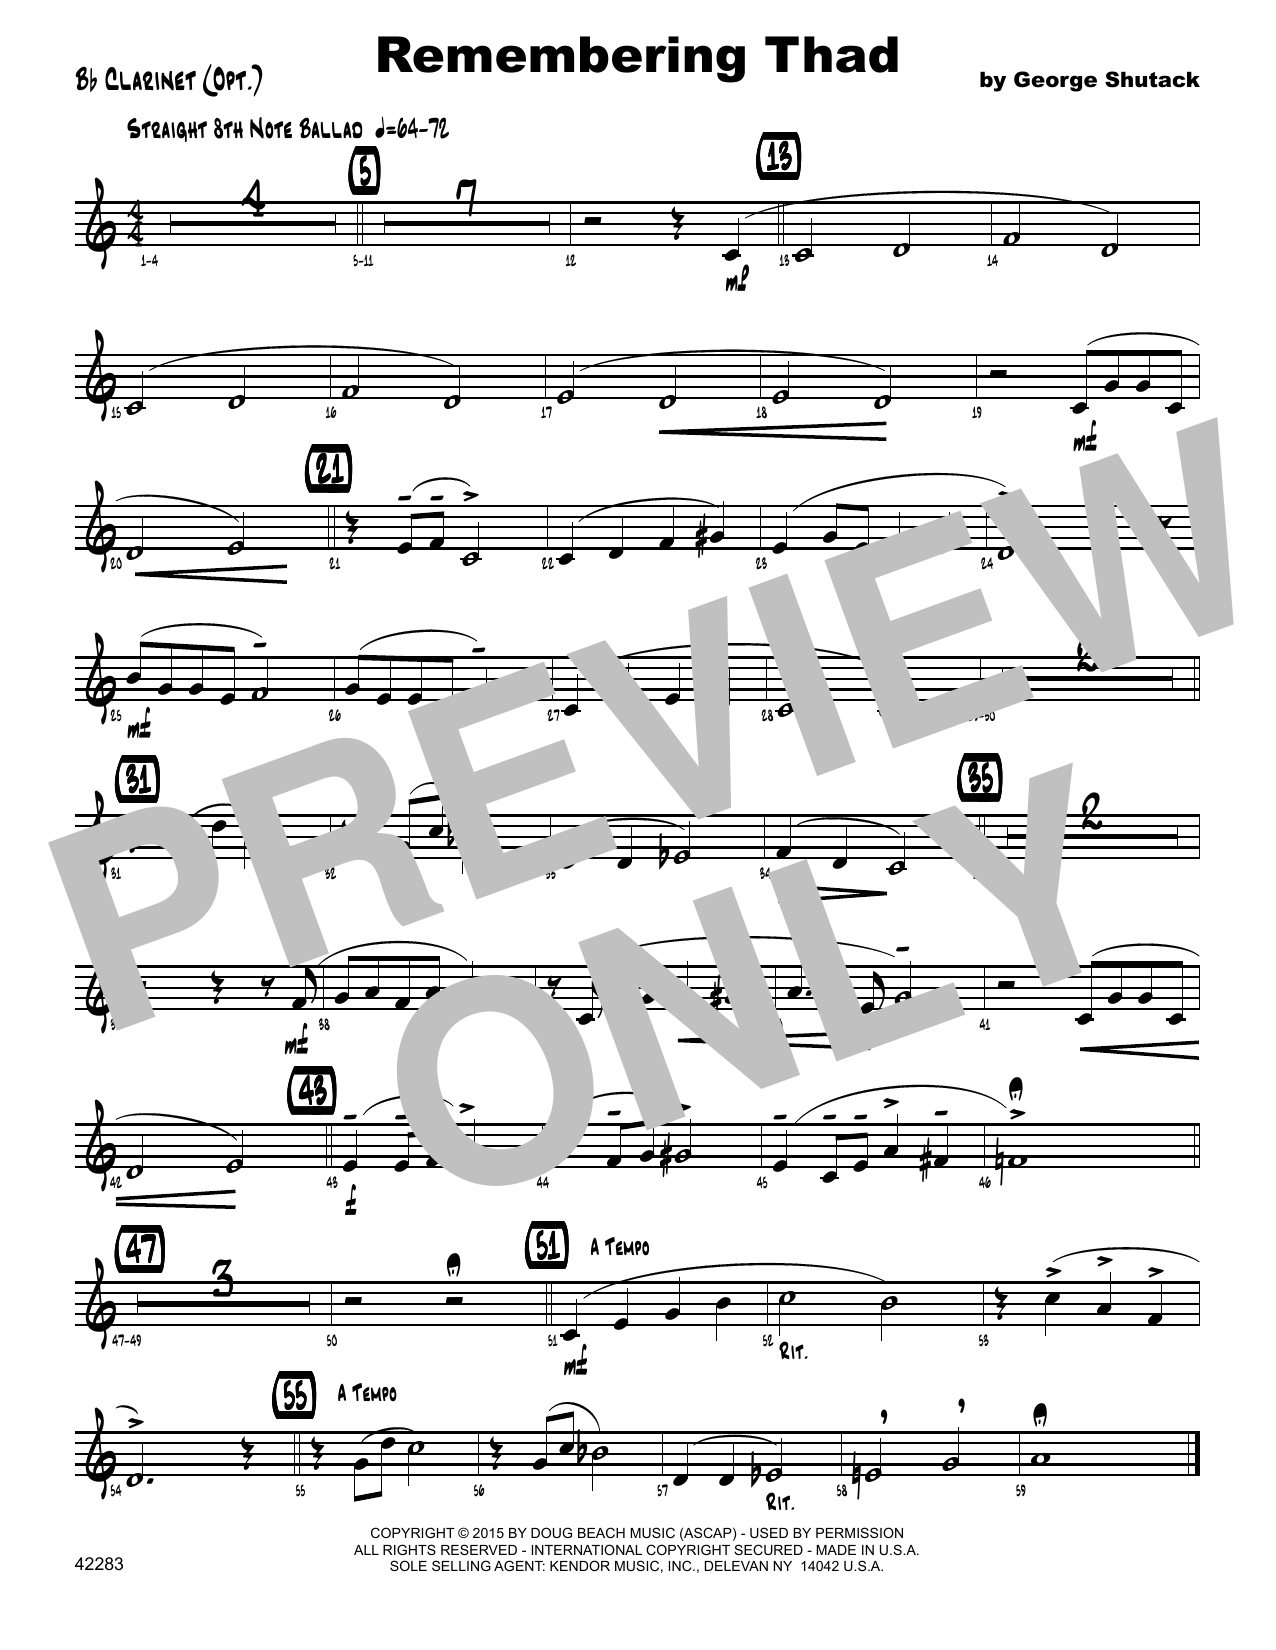 Download George Shutack Remembering Thad - Bb Clarinet Sheet Music